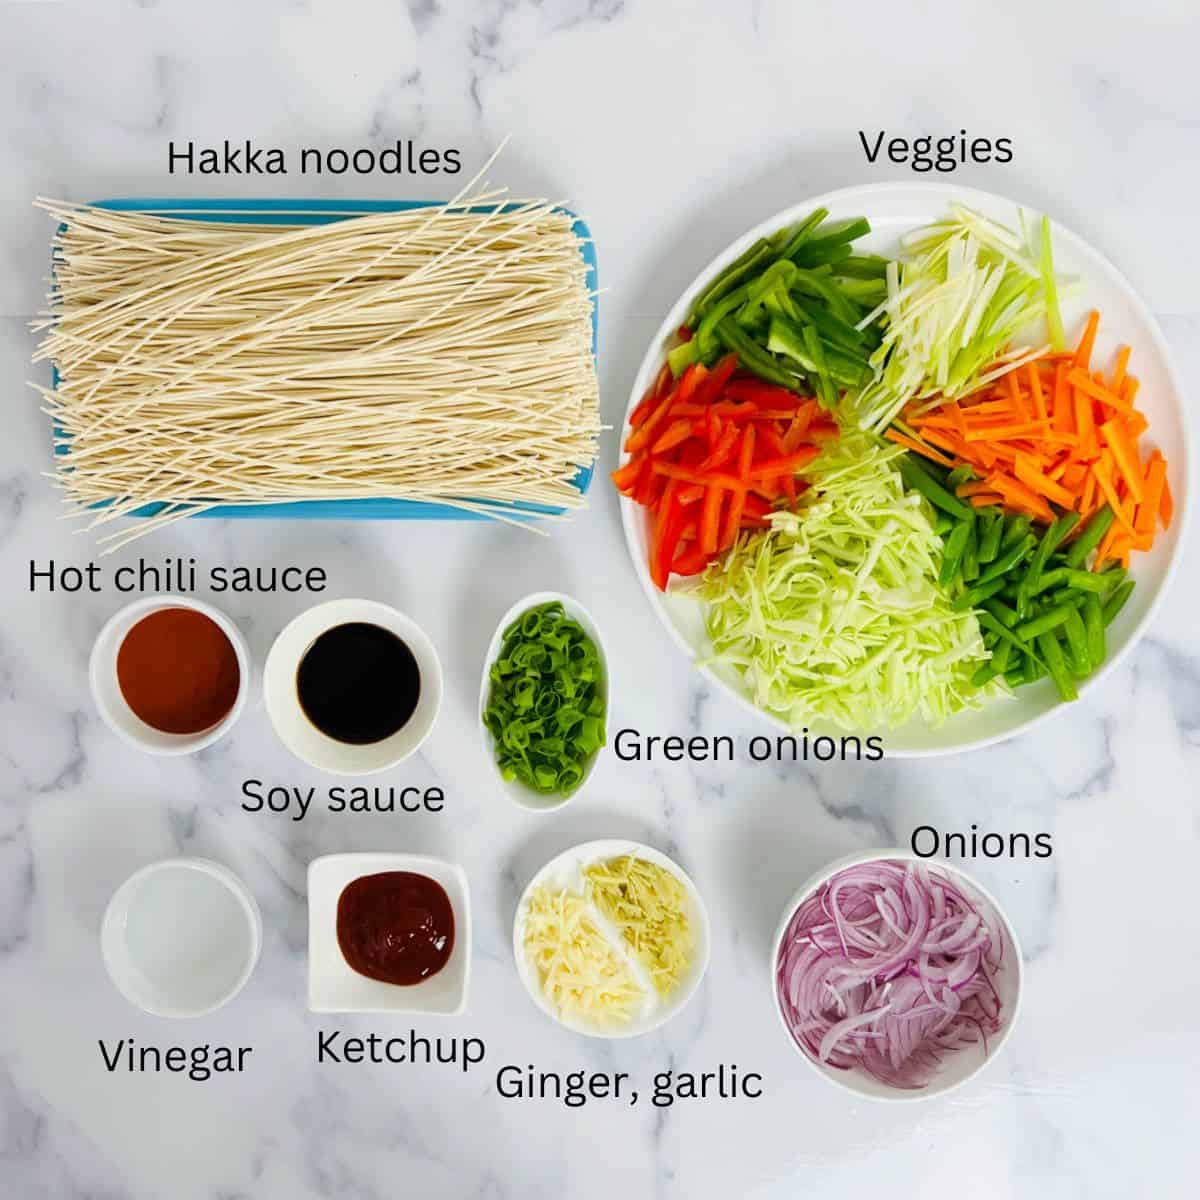 hakka noodles ingredients with labels.